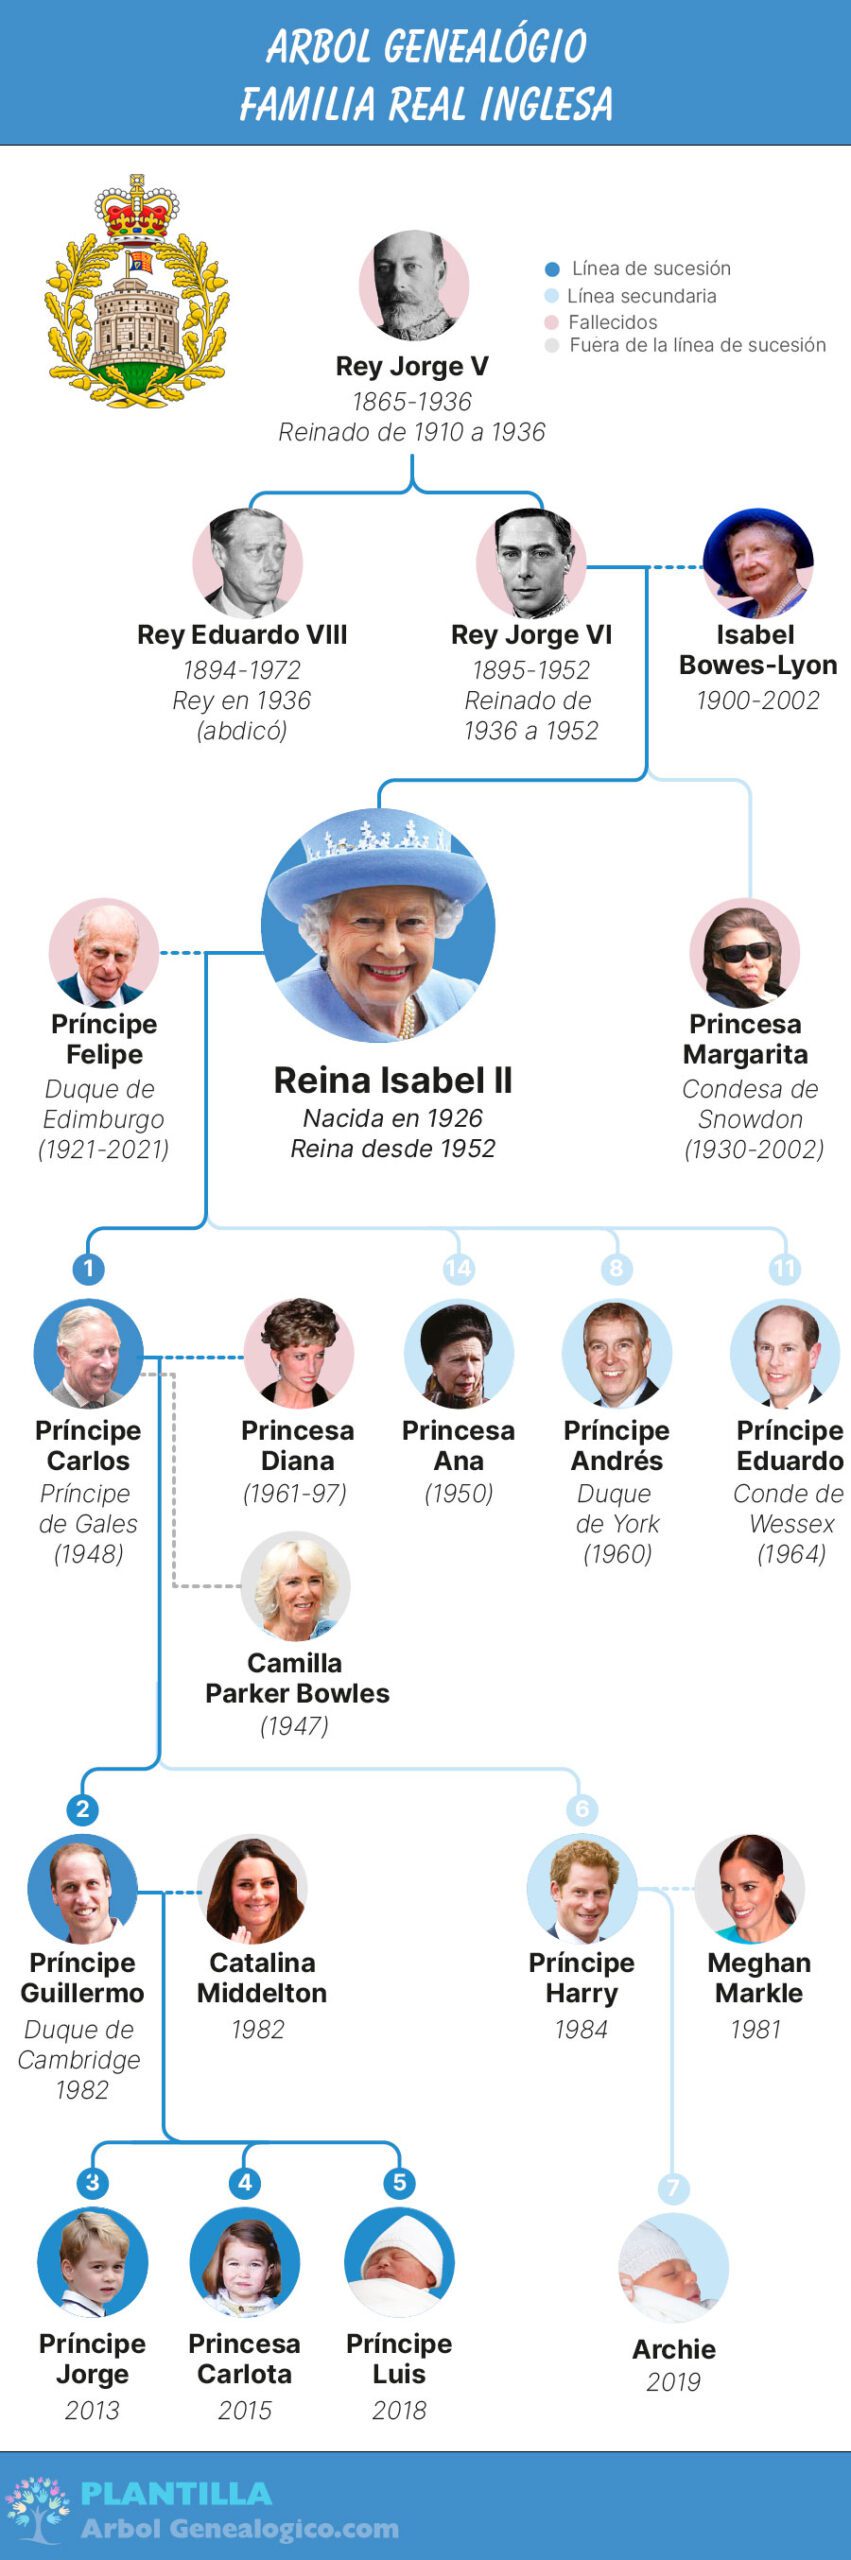 arbol genealogico familia real inglesa